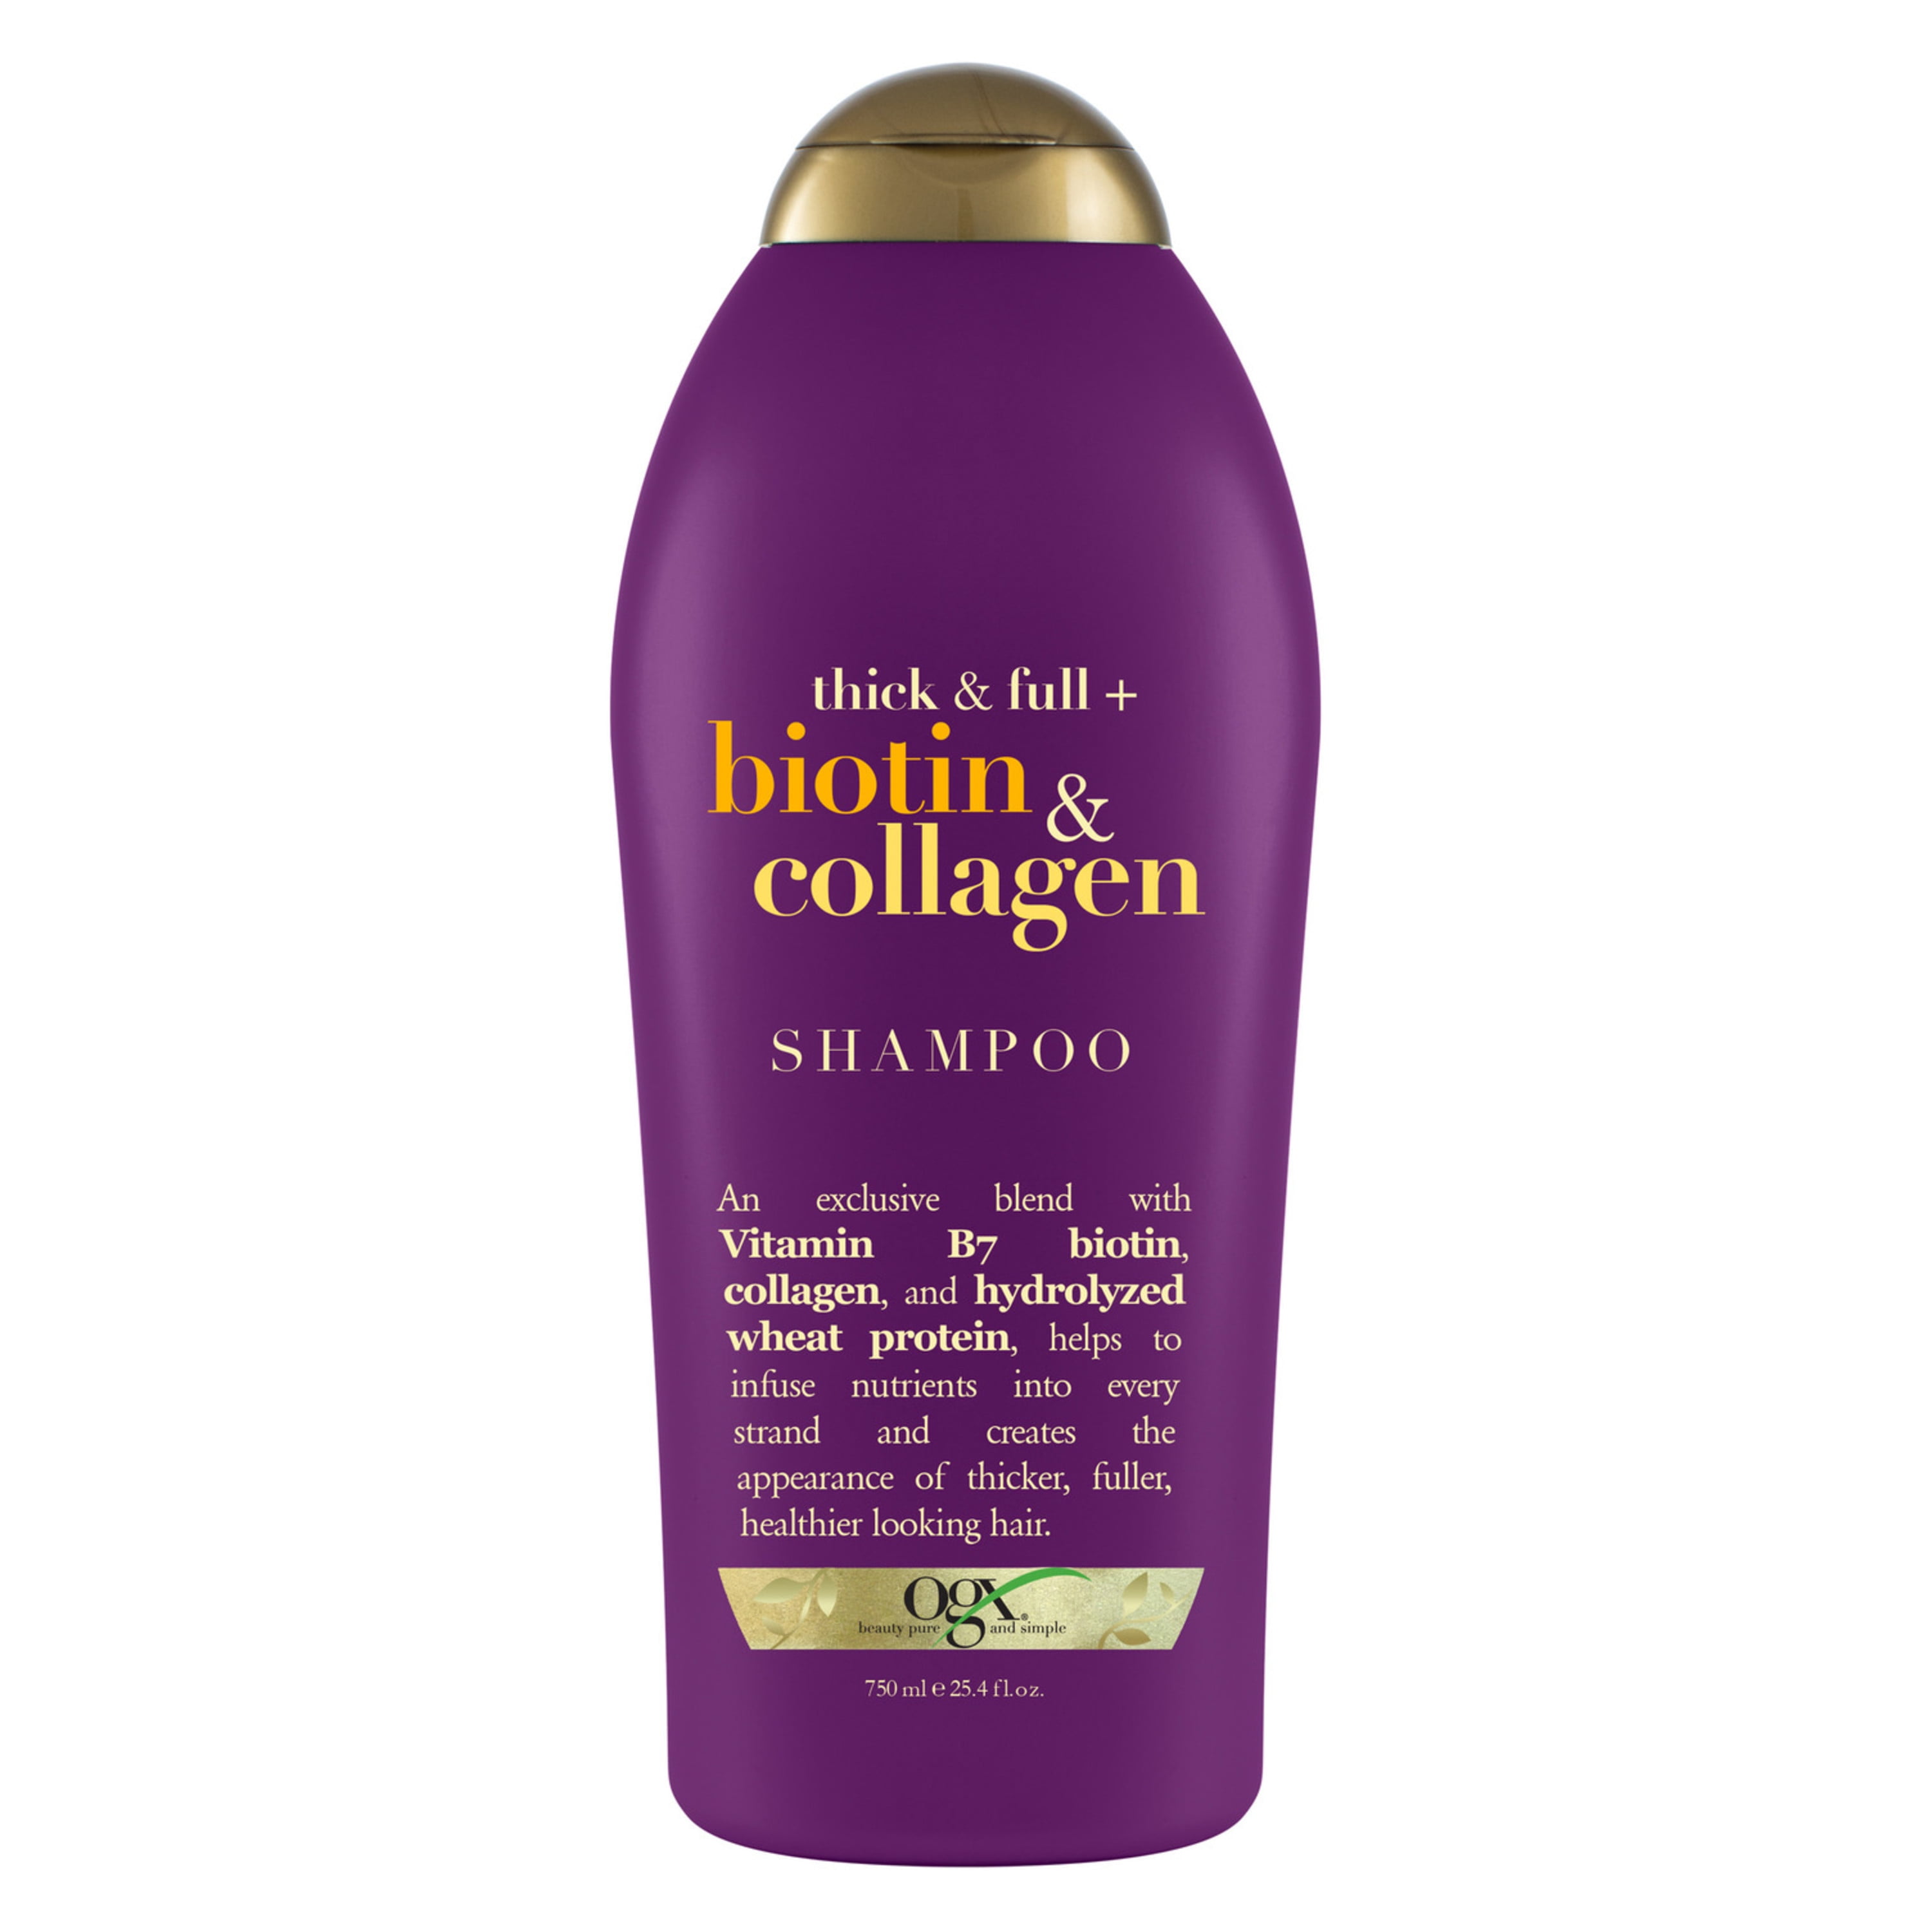 Stedord helgen Implement OGX Thick & Full + Biotin & Collagen Volumizing Daily Shampoo, 25.4 fl oz -  Walmart.com